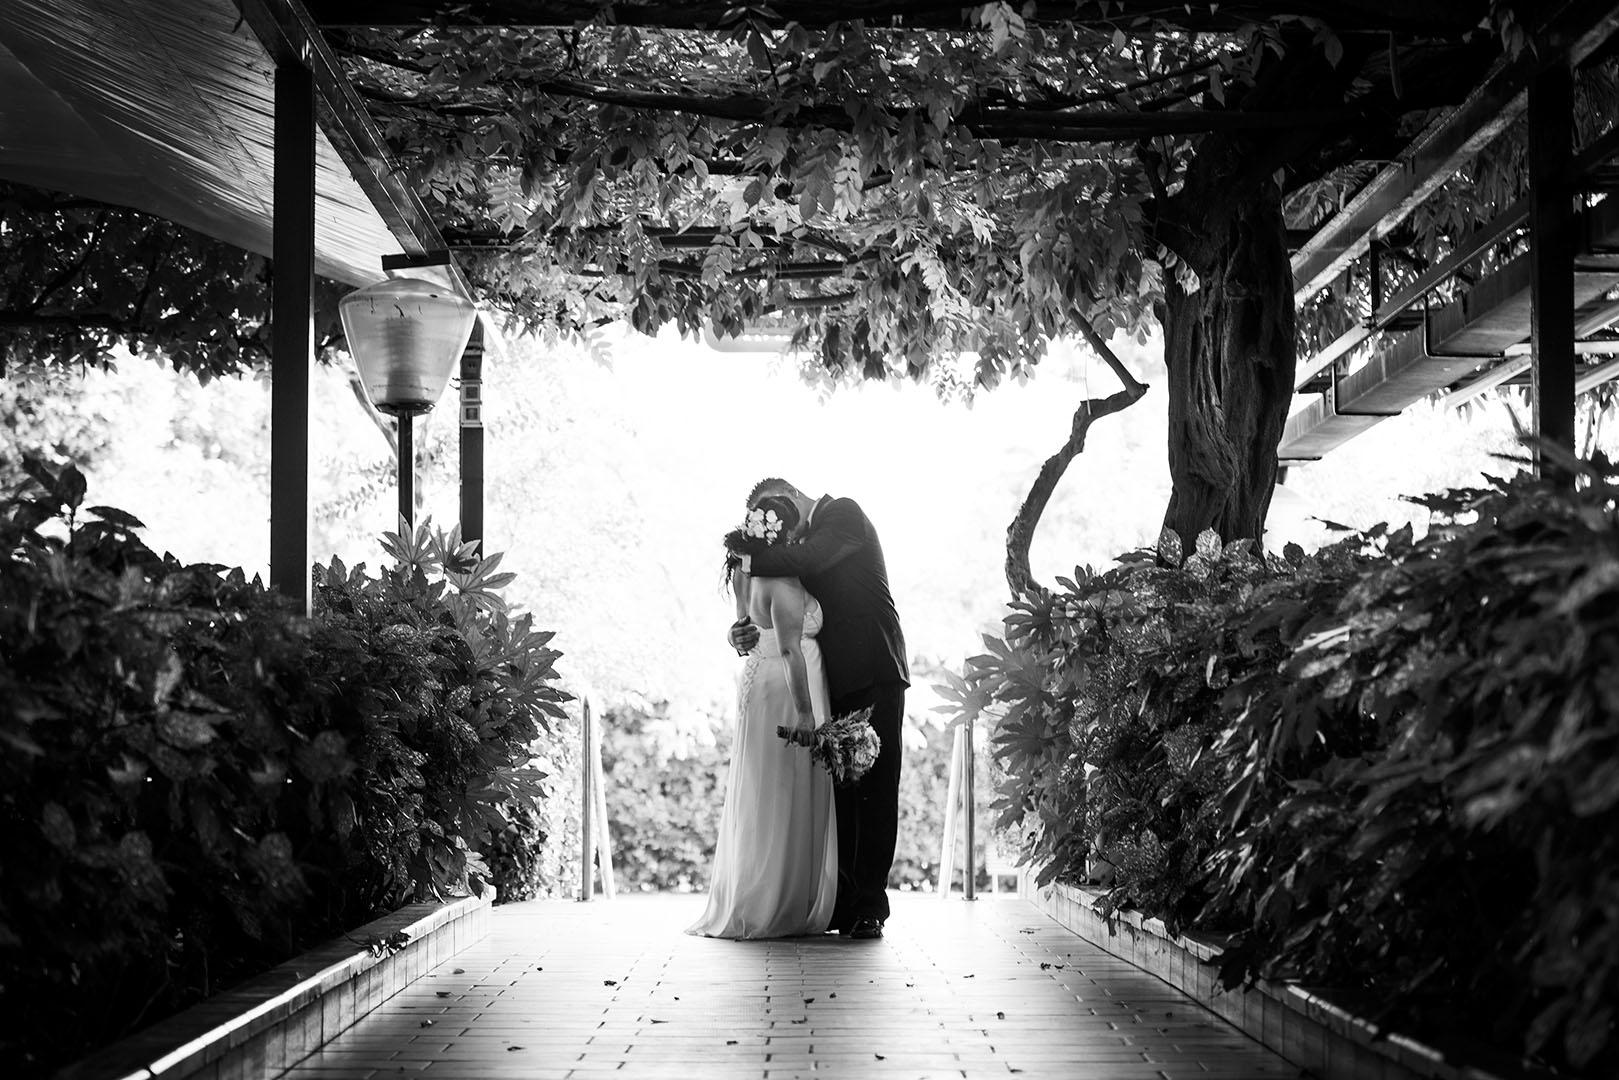 Fotografo Matrimonio Milano | Wedding Photographer Italy | Servizio Fotografico Matrimio Milano